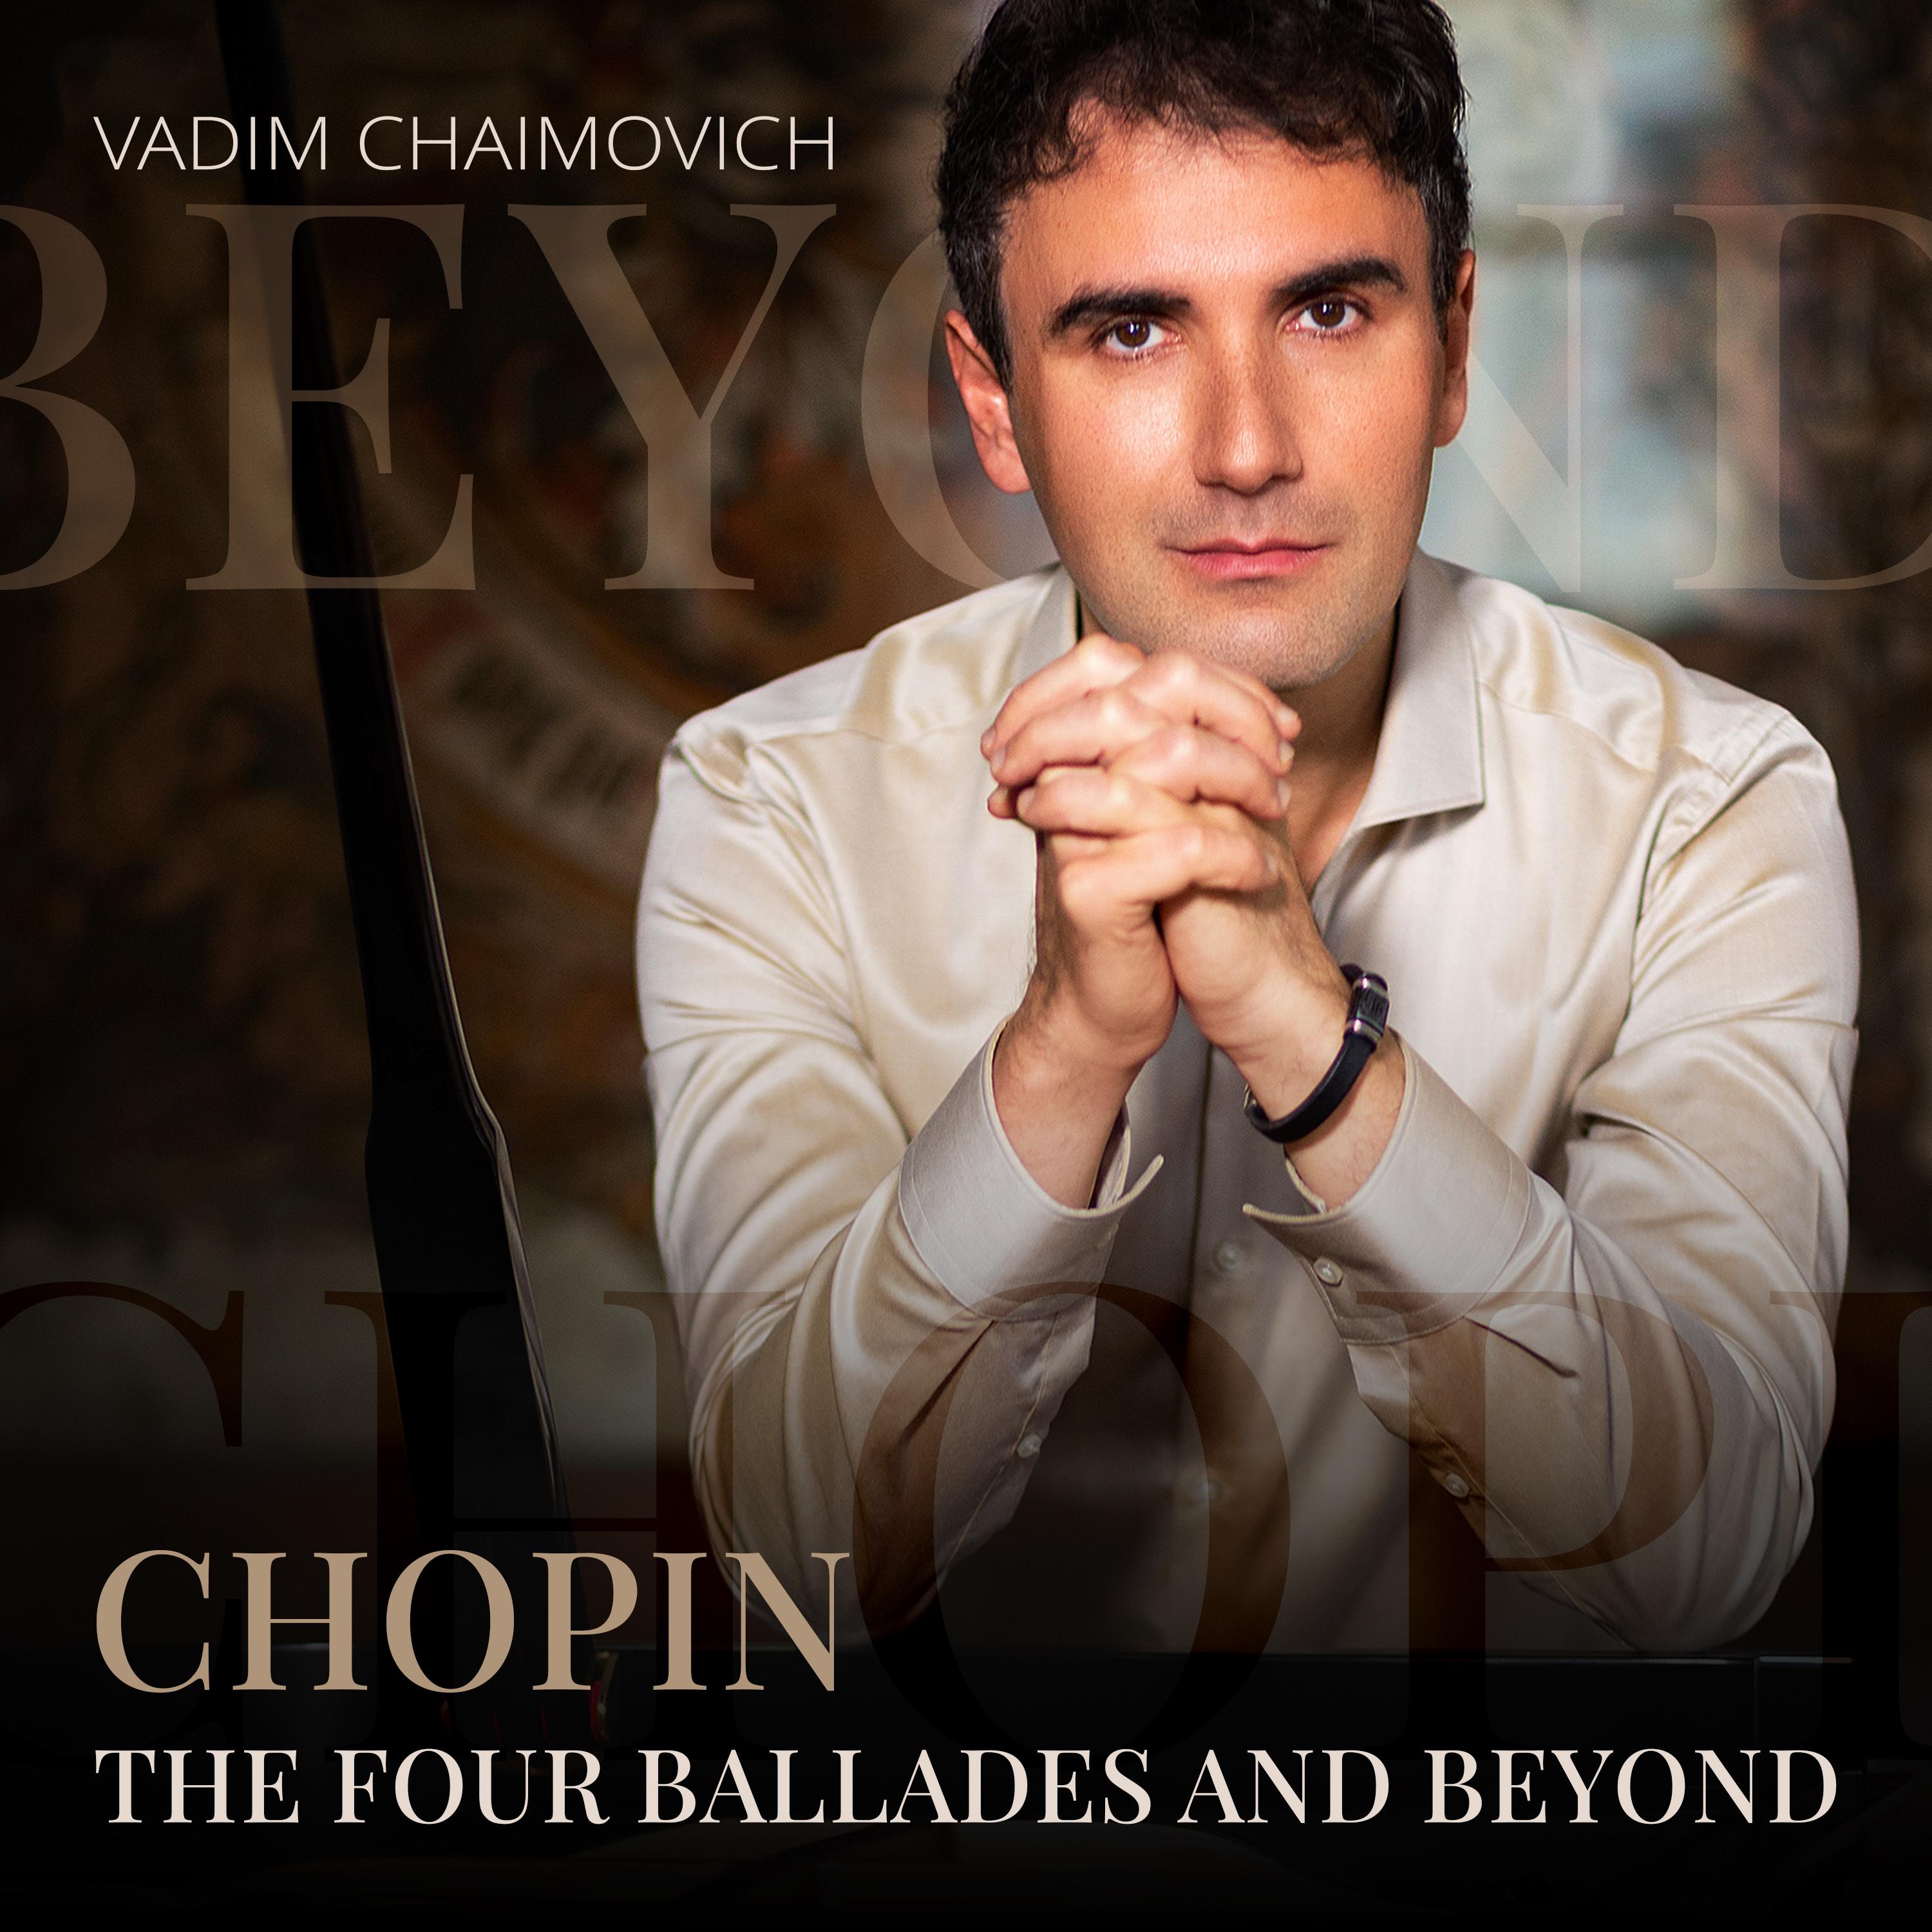 Vadim Chaimovich - Waltzes, Op. 69:No. 2 in B Minor